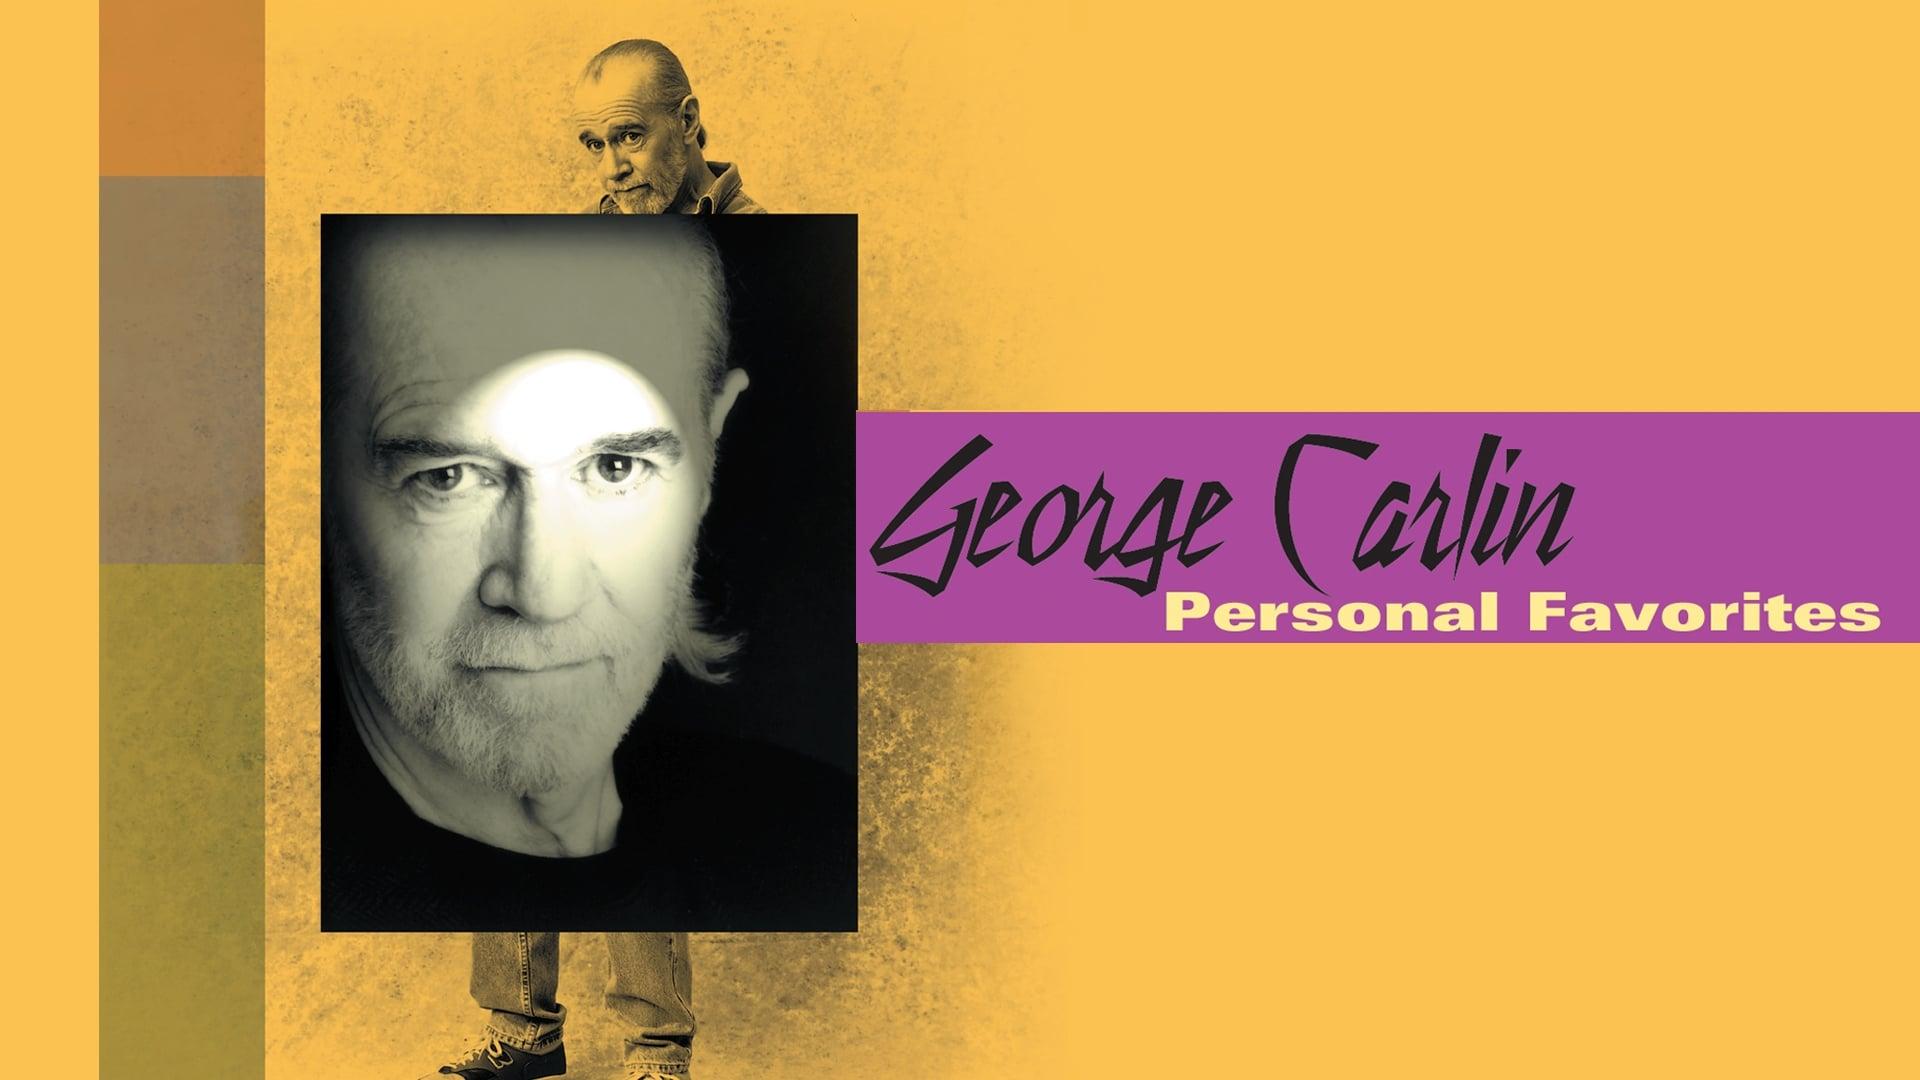 George Carlin: Personal Favorites backdrop